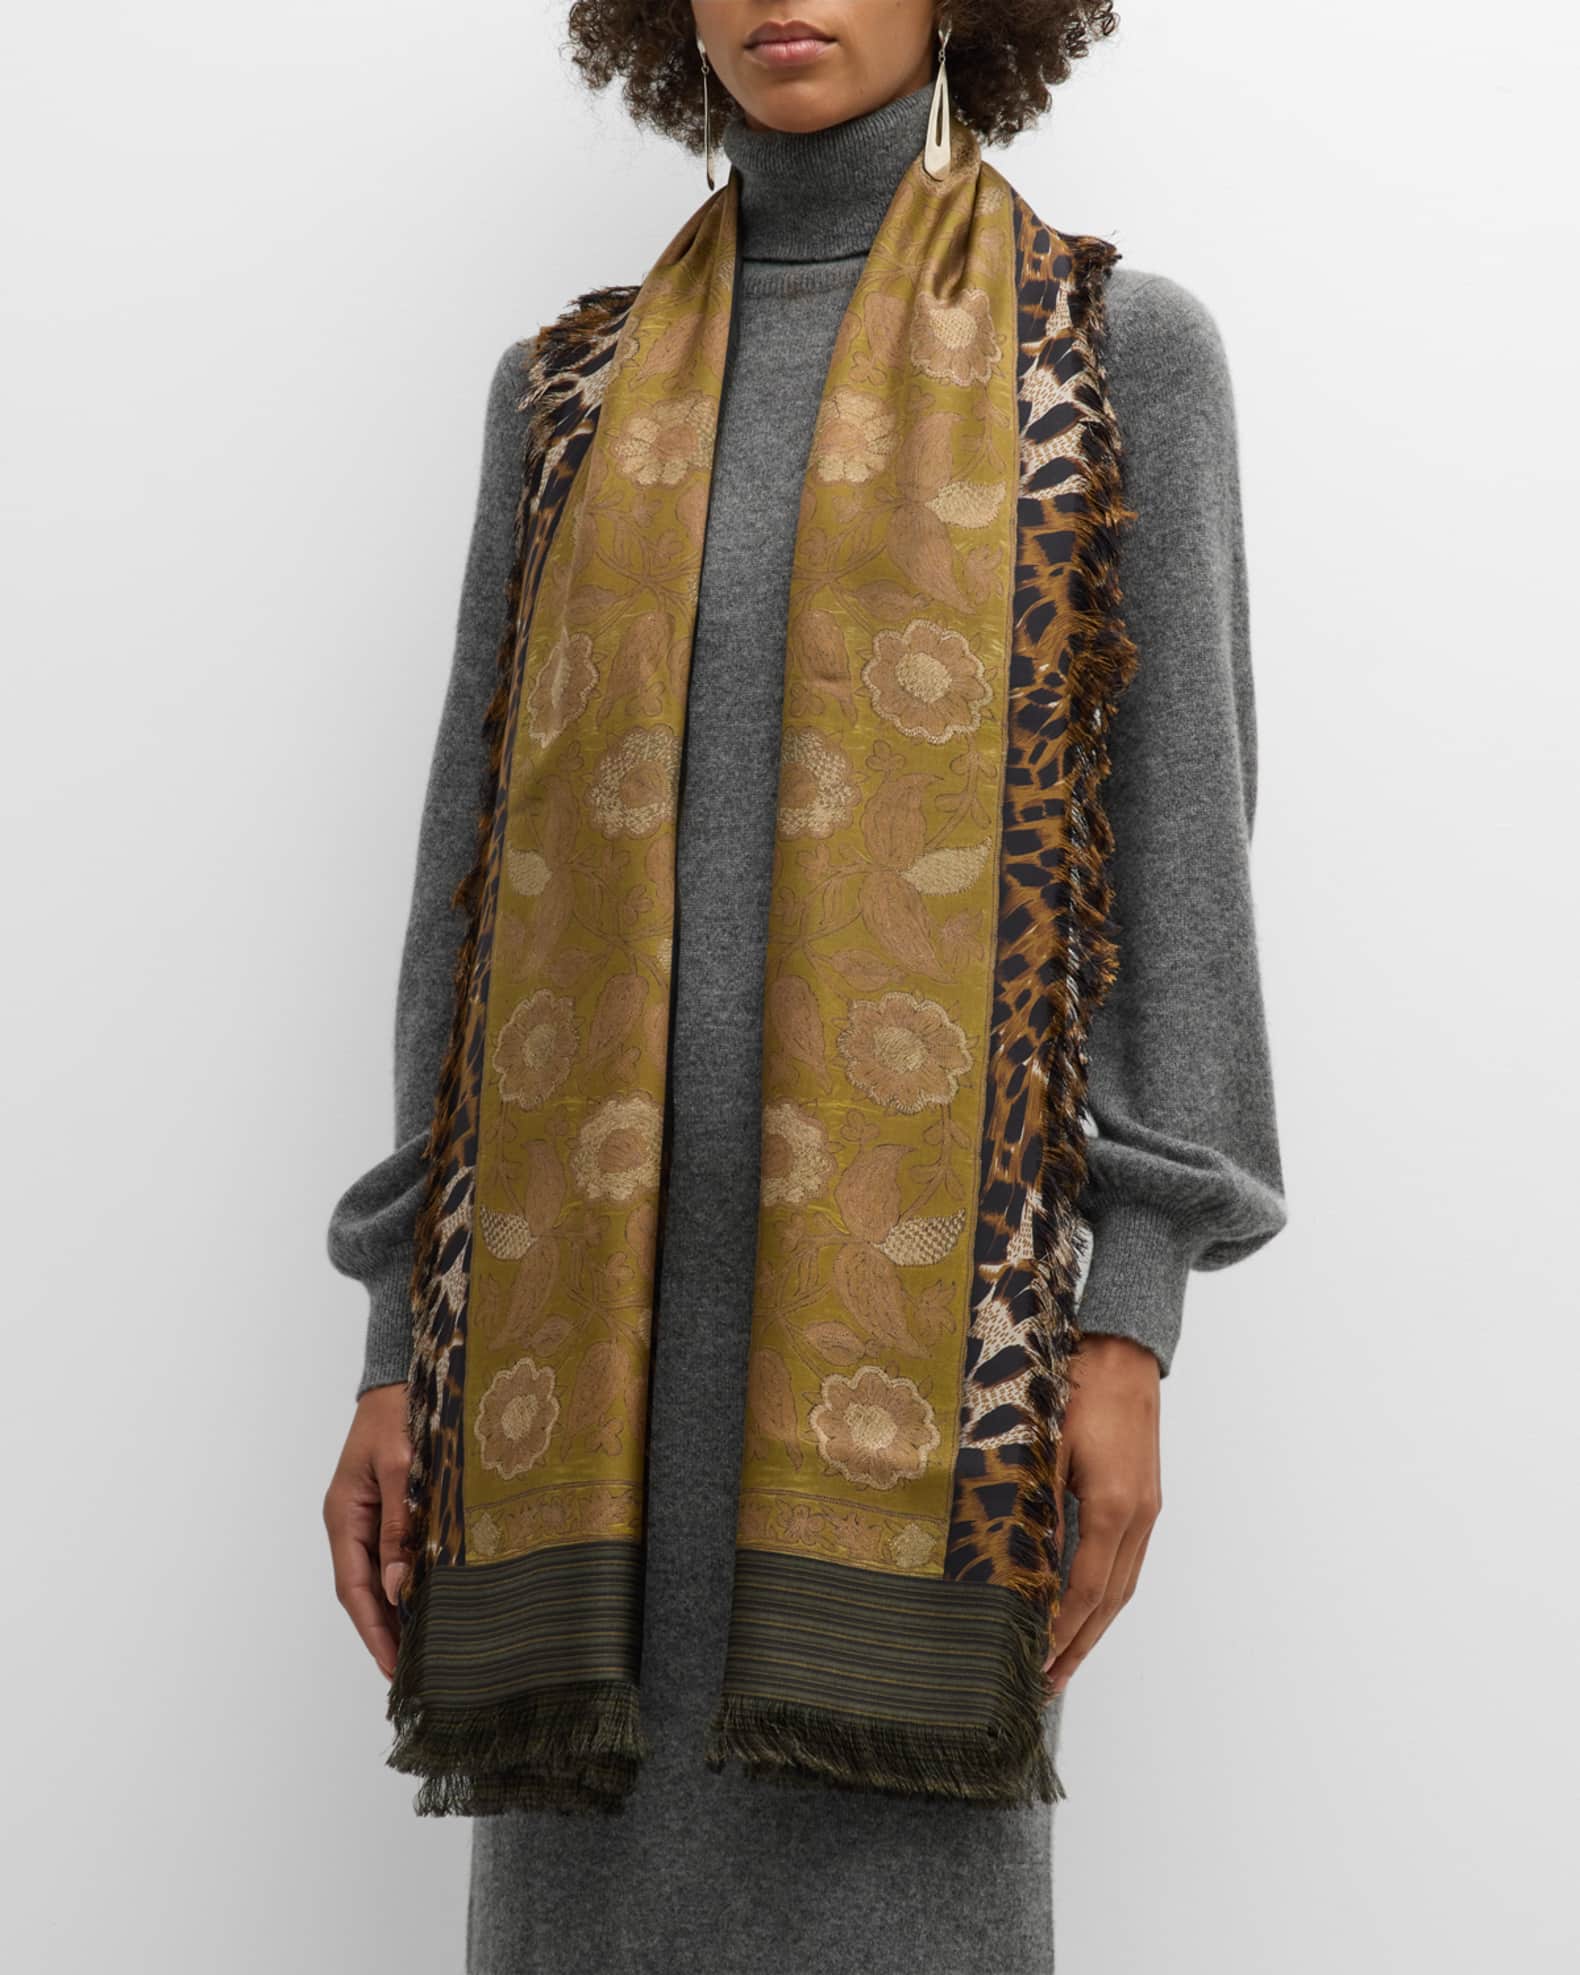 Pierre-Louis Mascia Multi-Print Wool Scarf, Jungle Floral, Women's, Scarves & Wraps Scarf Scarves